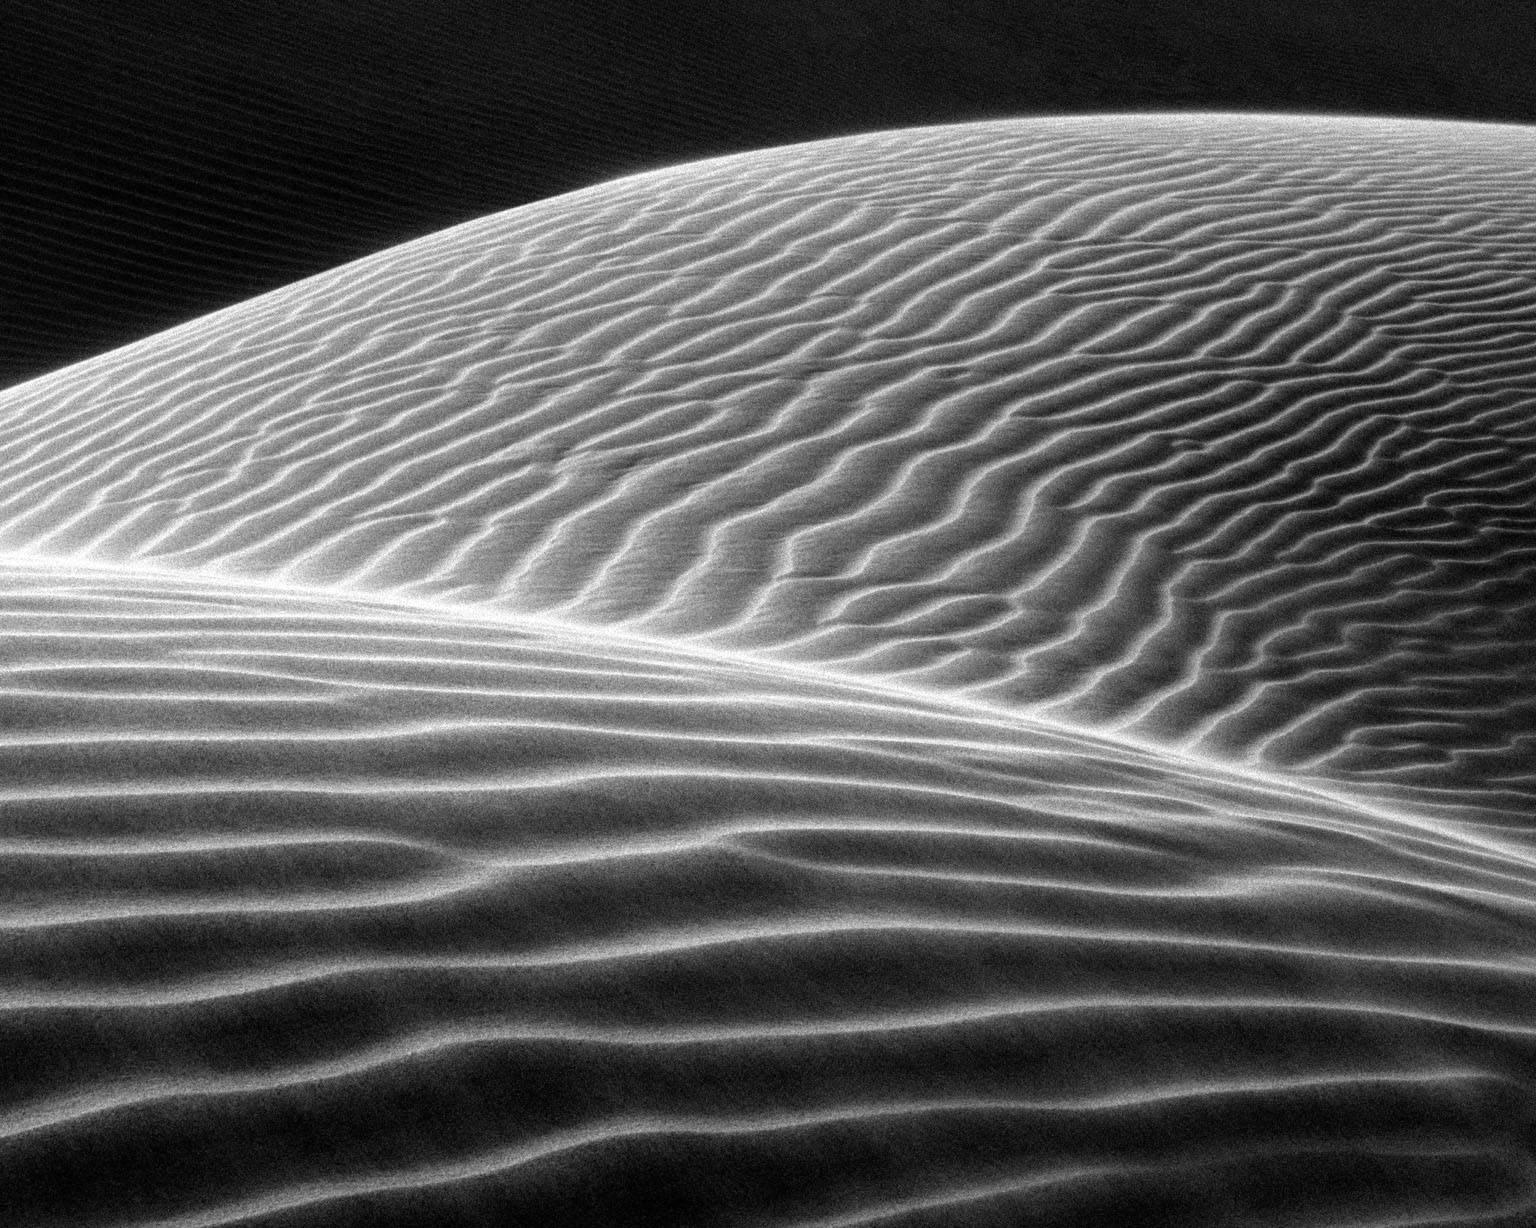 Sand Dunes Series #8 - Black Landscape Photograph by Keiji Iwai